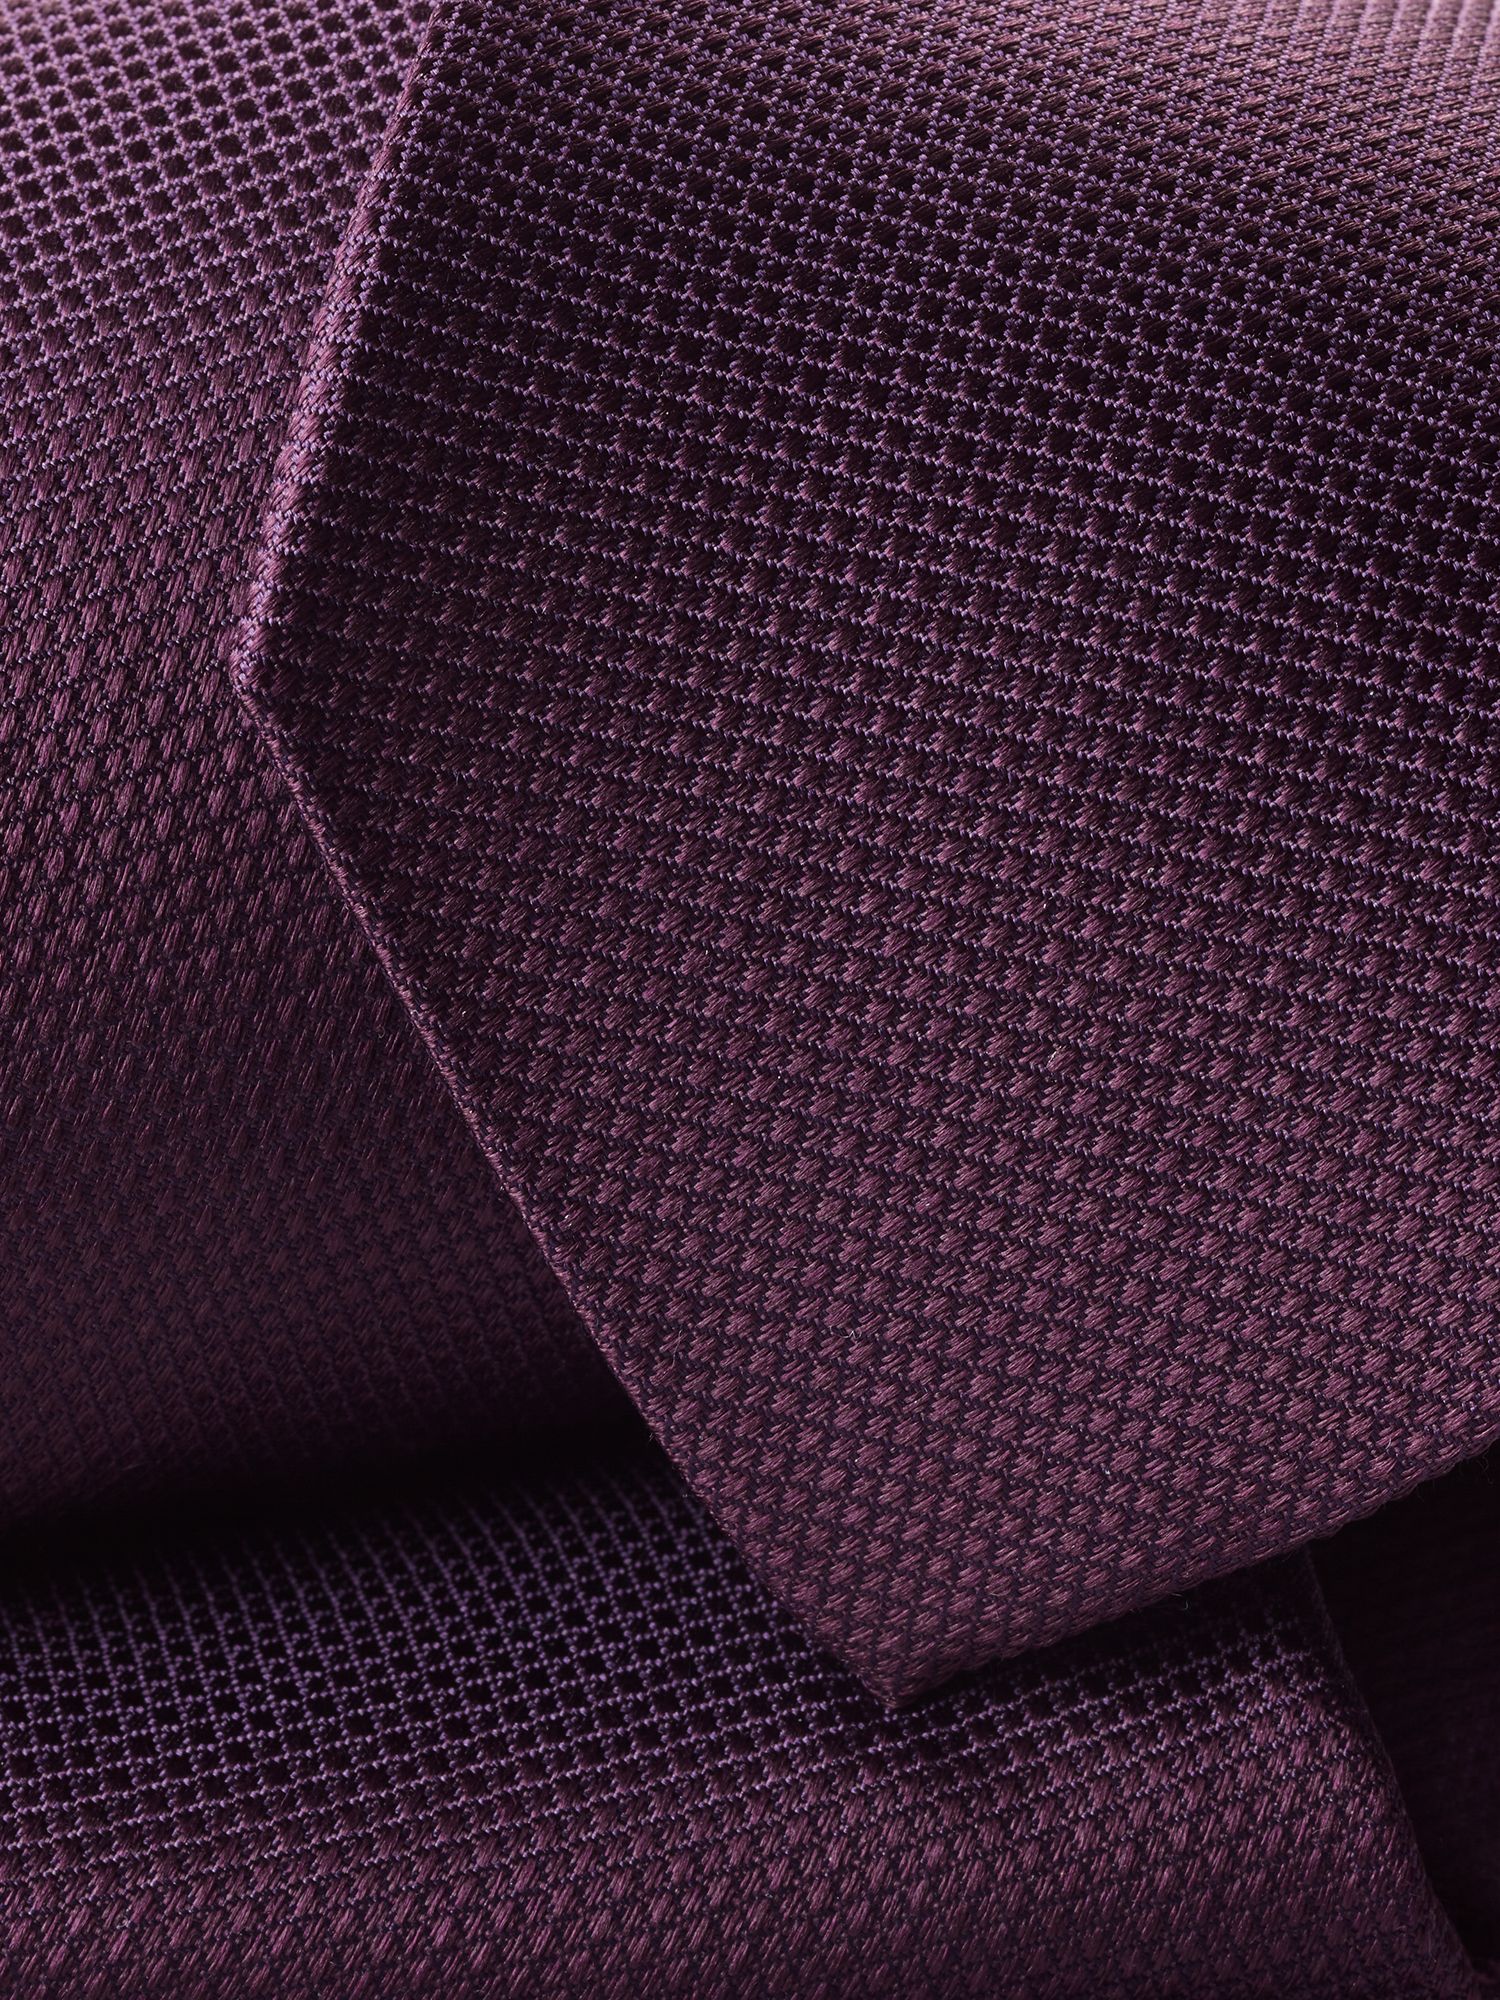 Charles Tyrwhitt Textured Silk Stain Resistant Tie, Blackberry Purple, One Size